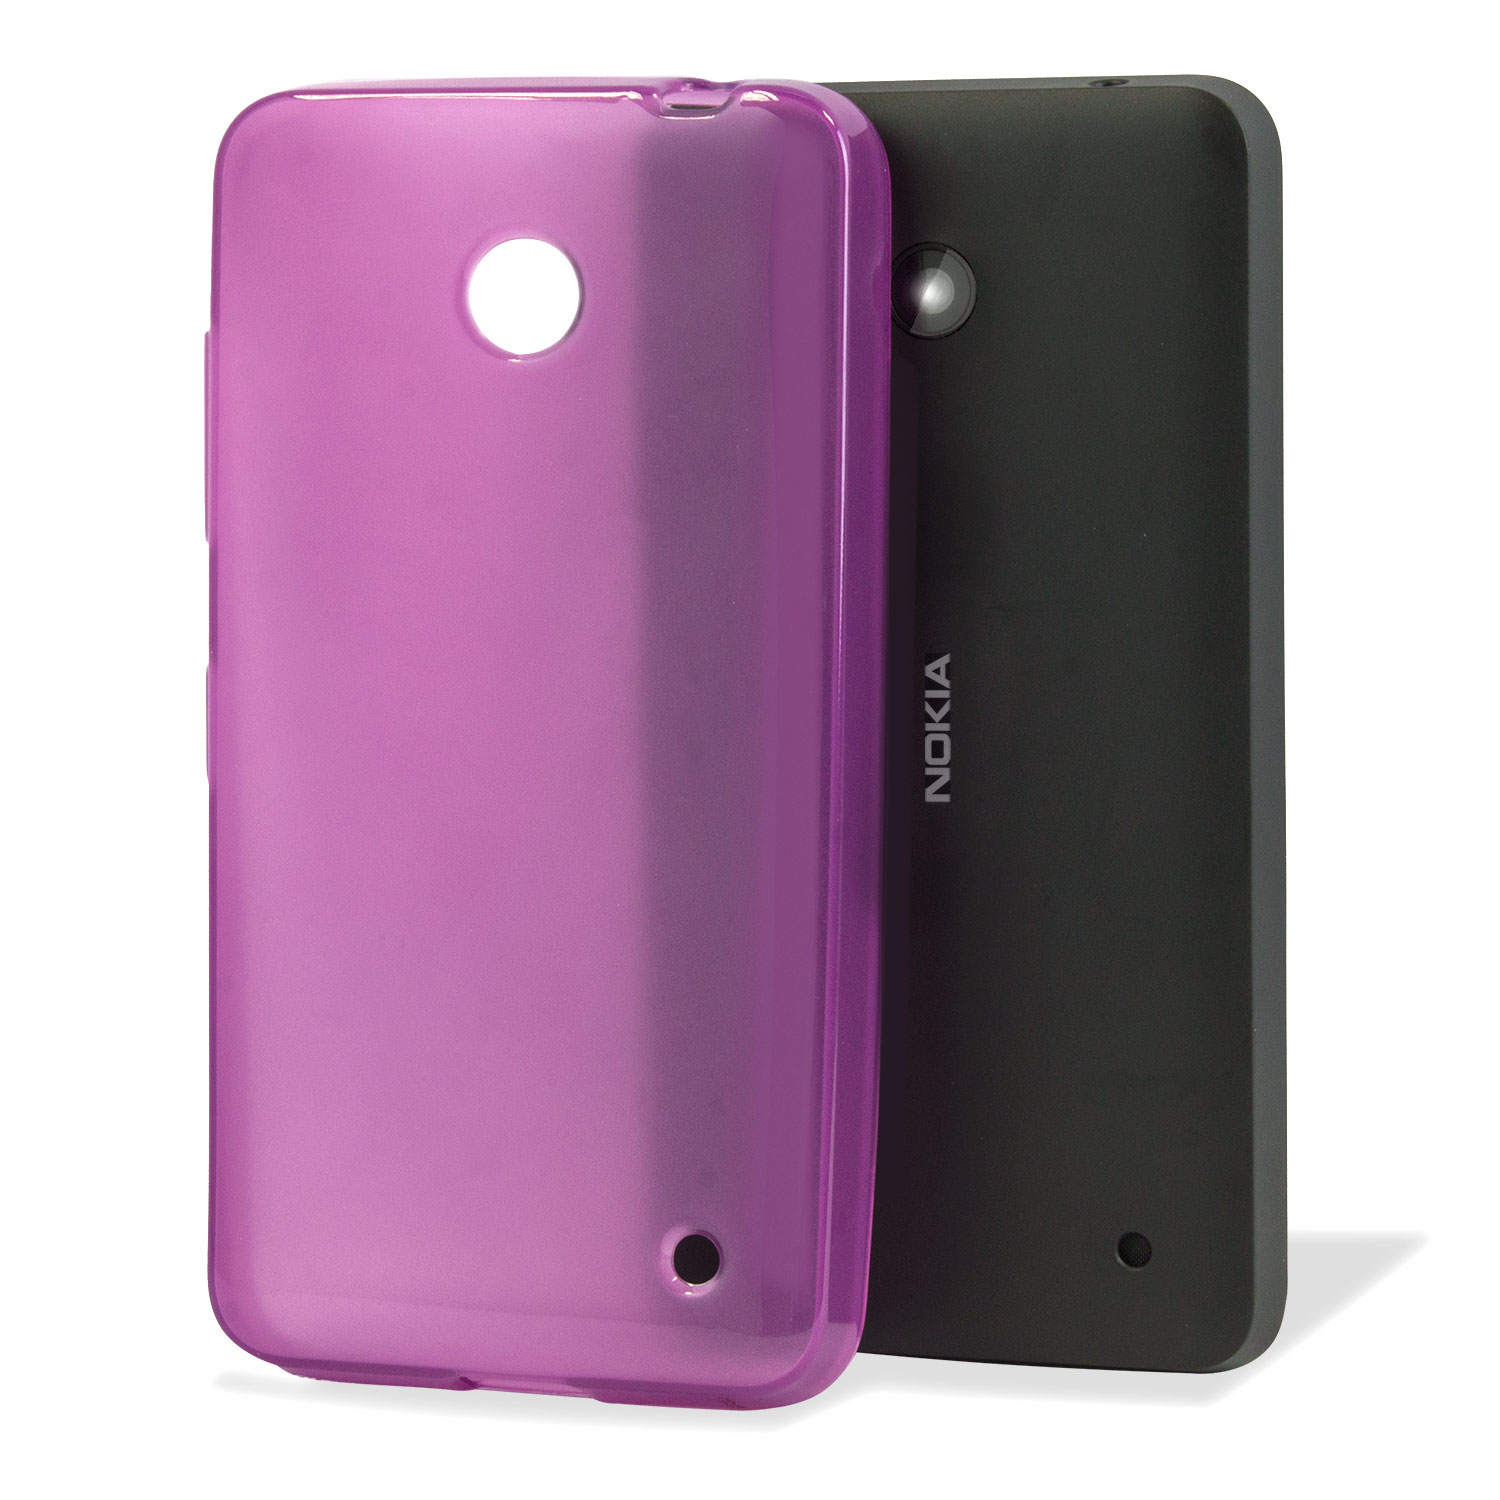 goedkoop keuken Peave FlexiShield Case voor Nokia Lumia 635 / 630 - Paars